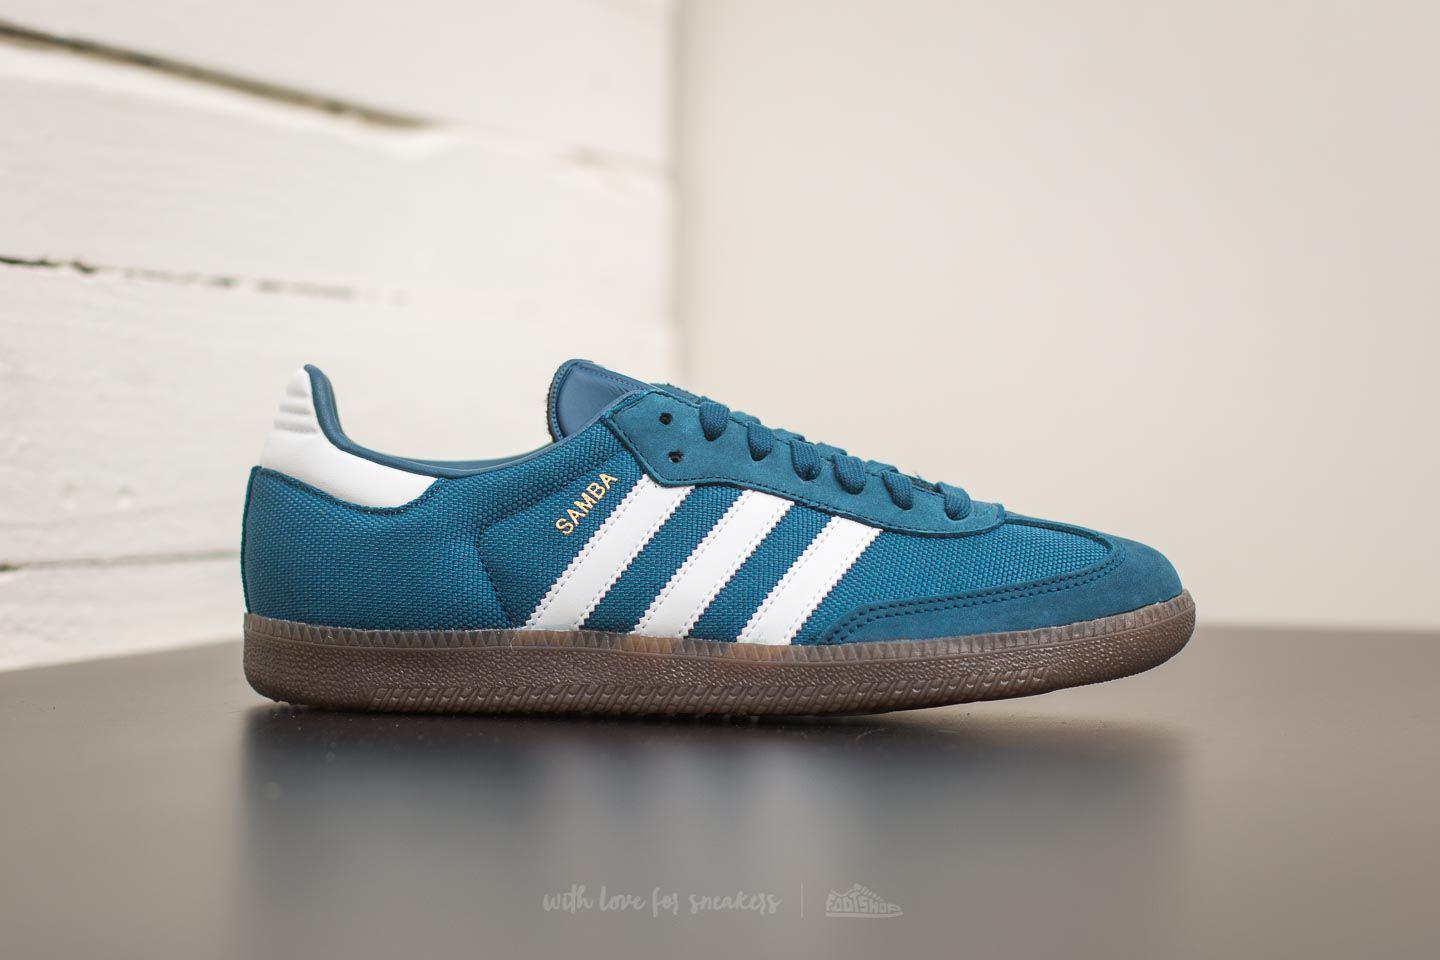 adidas samba blue and white